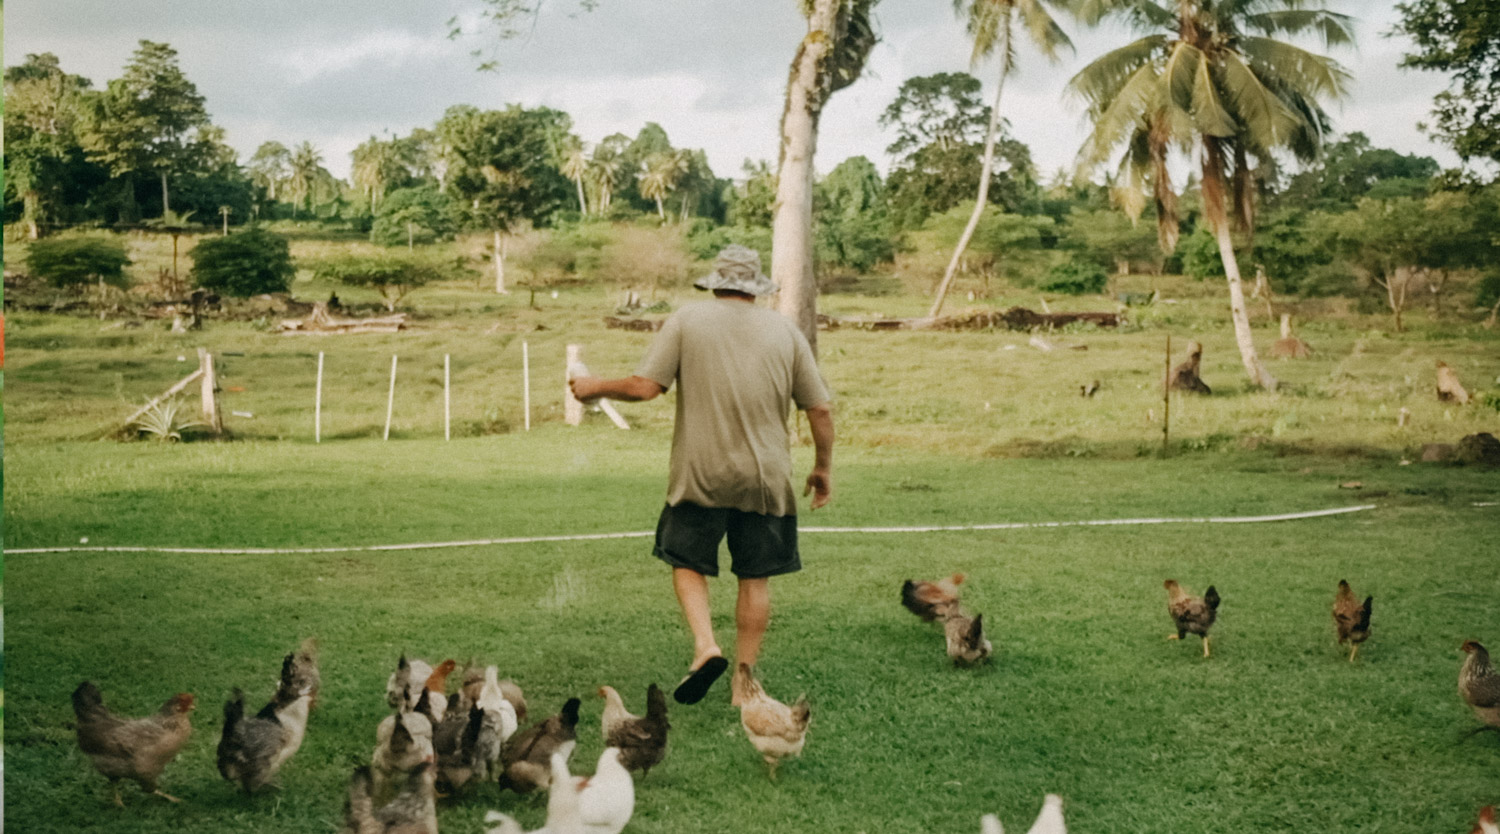 SAFPROM-Samoa-Savaii-SamoaMinistryofAgriculture-Vegetablefarmer-farmer-agriculture-documentary-photography-documentaryfilm-cattlefarm-organicfarming-10